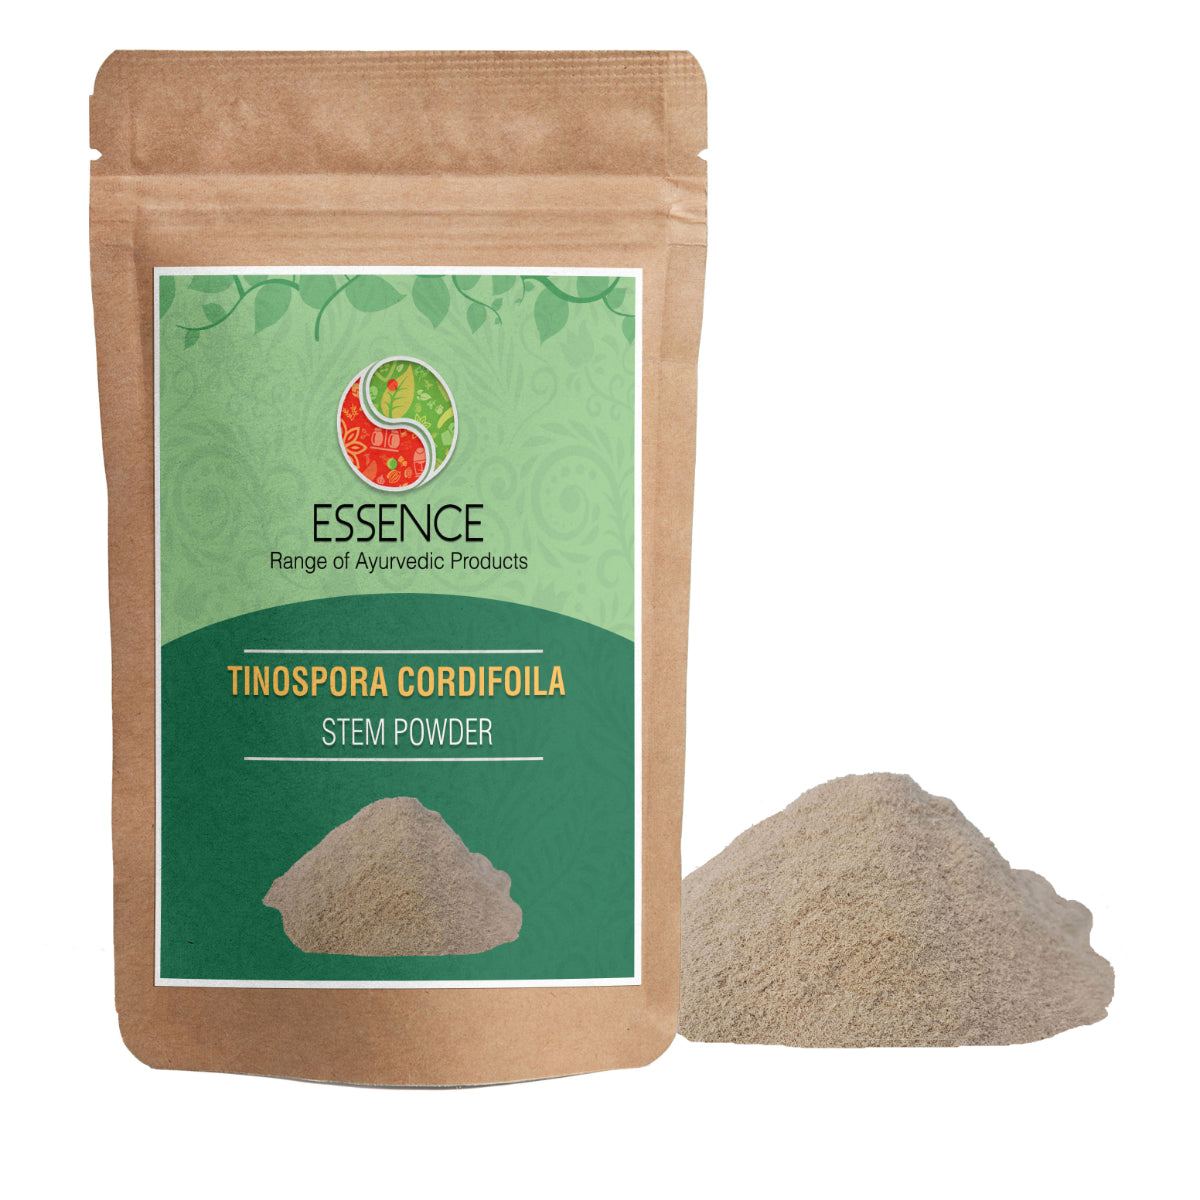 Essence Tinospora Cordifolia Stem Powder, Giloy for Liver, Immunity, Detox, Guduchi - 7 oz. to 352 oz.